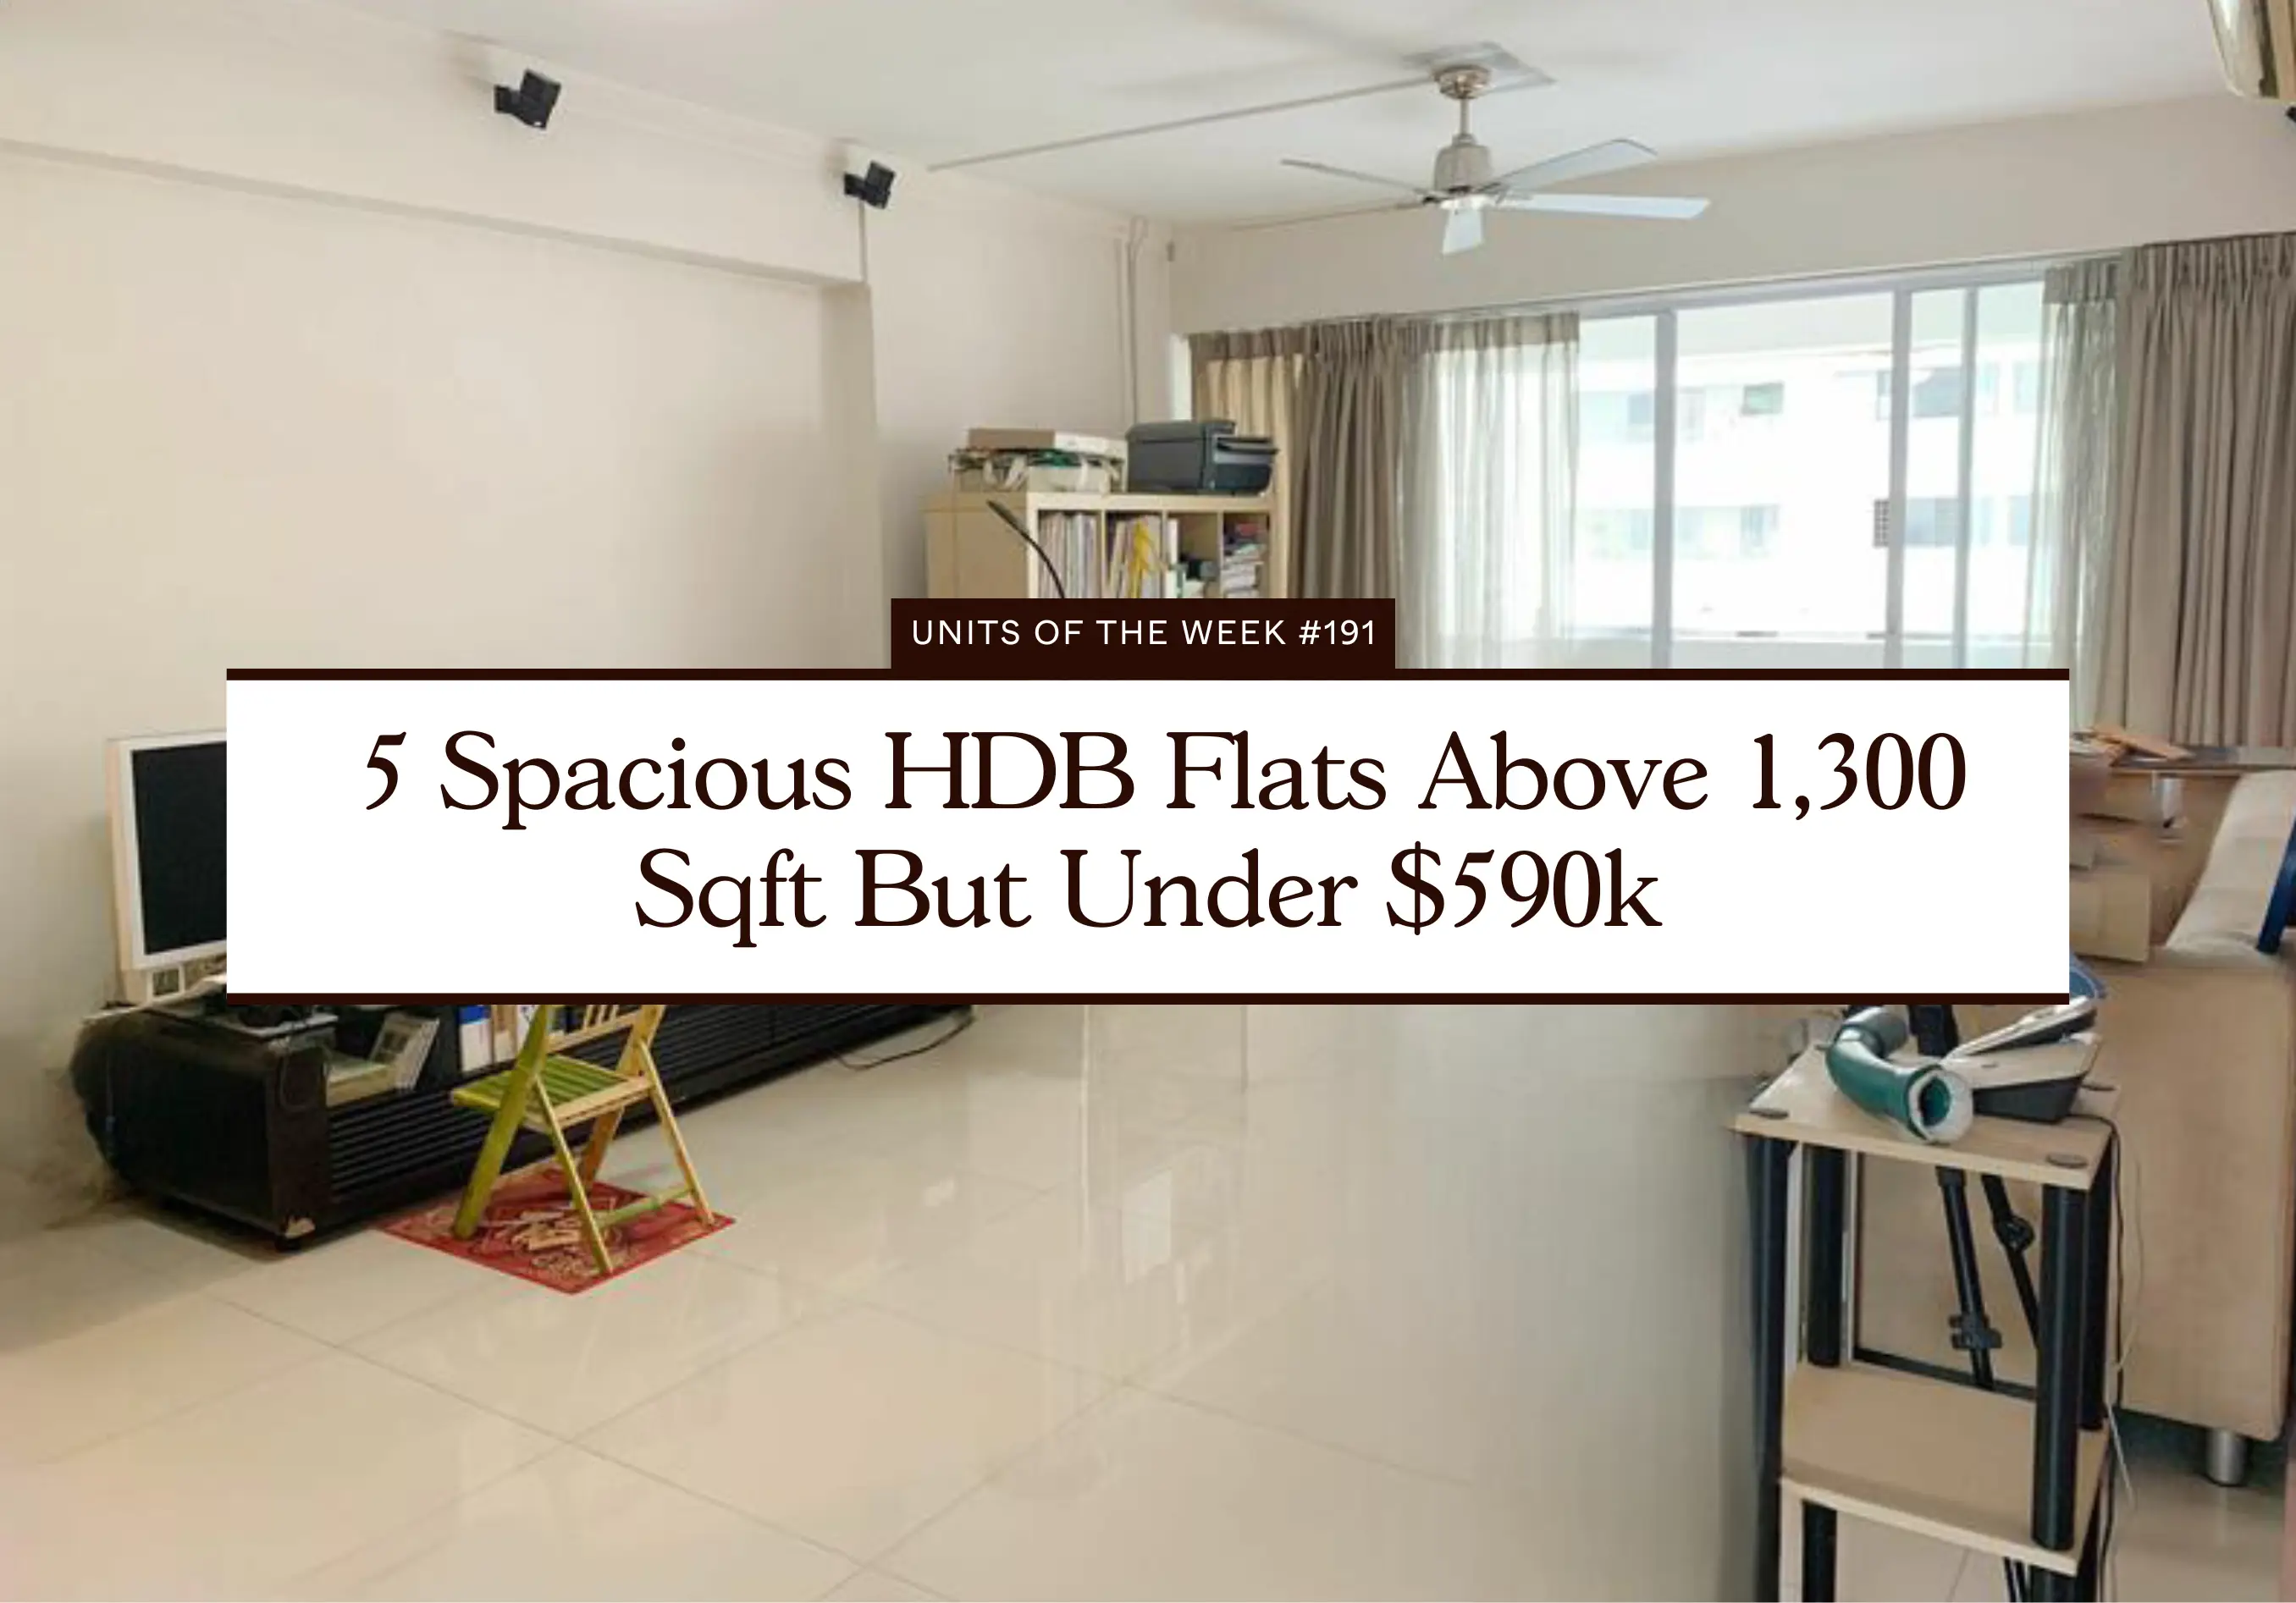 5 Spacious HDB Flats Above 1,300 Sqft But Under $590k